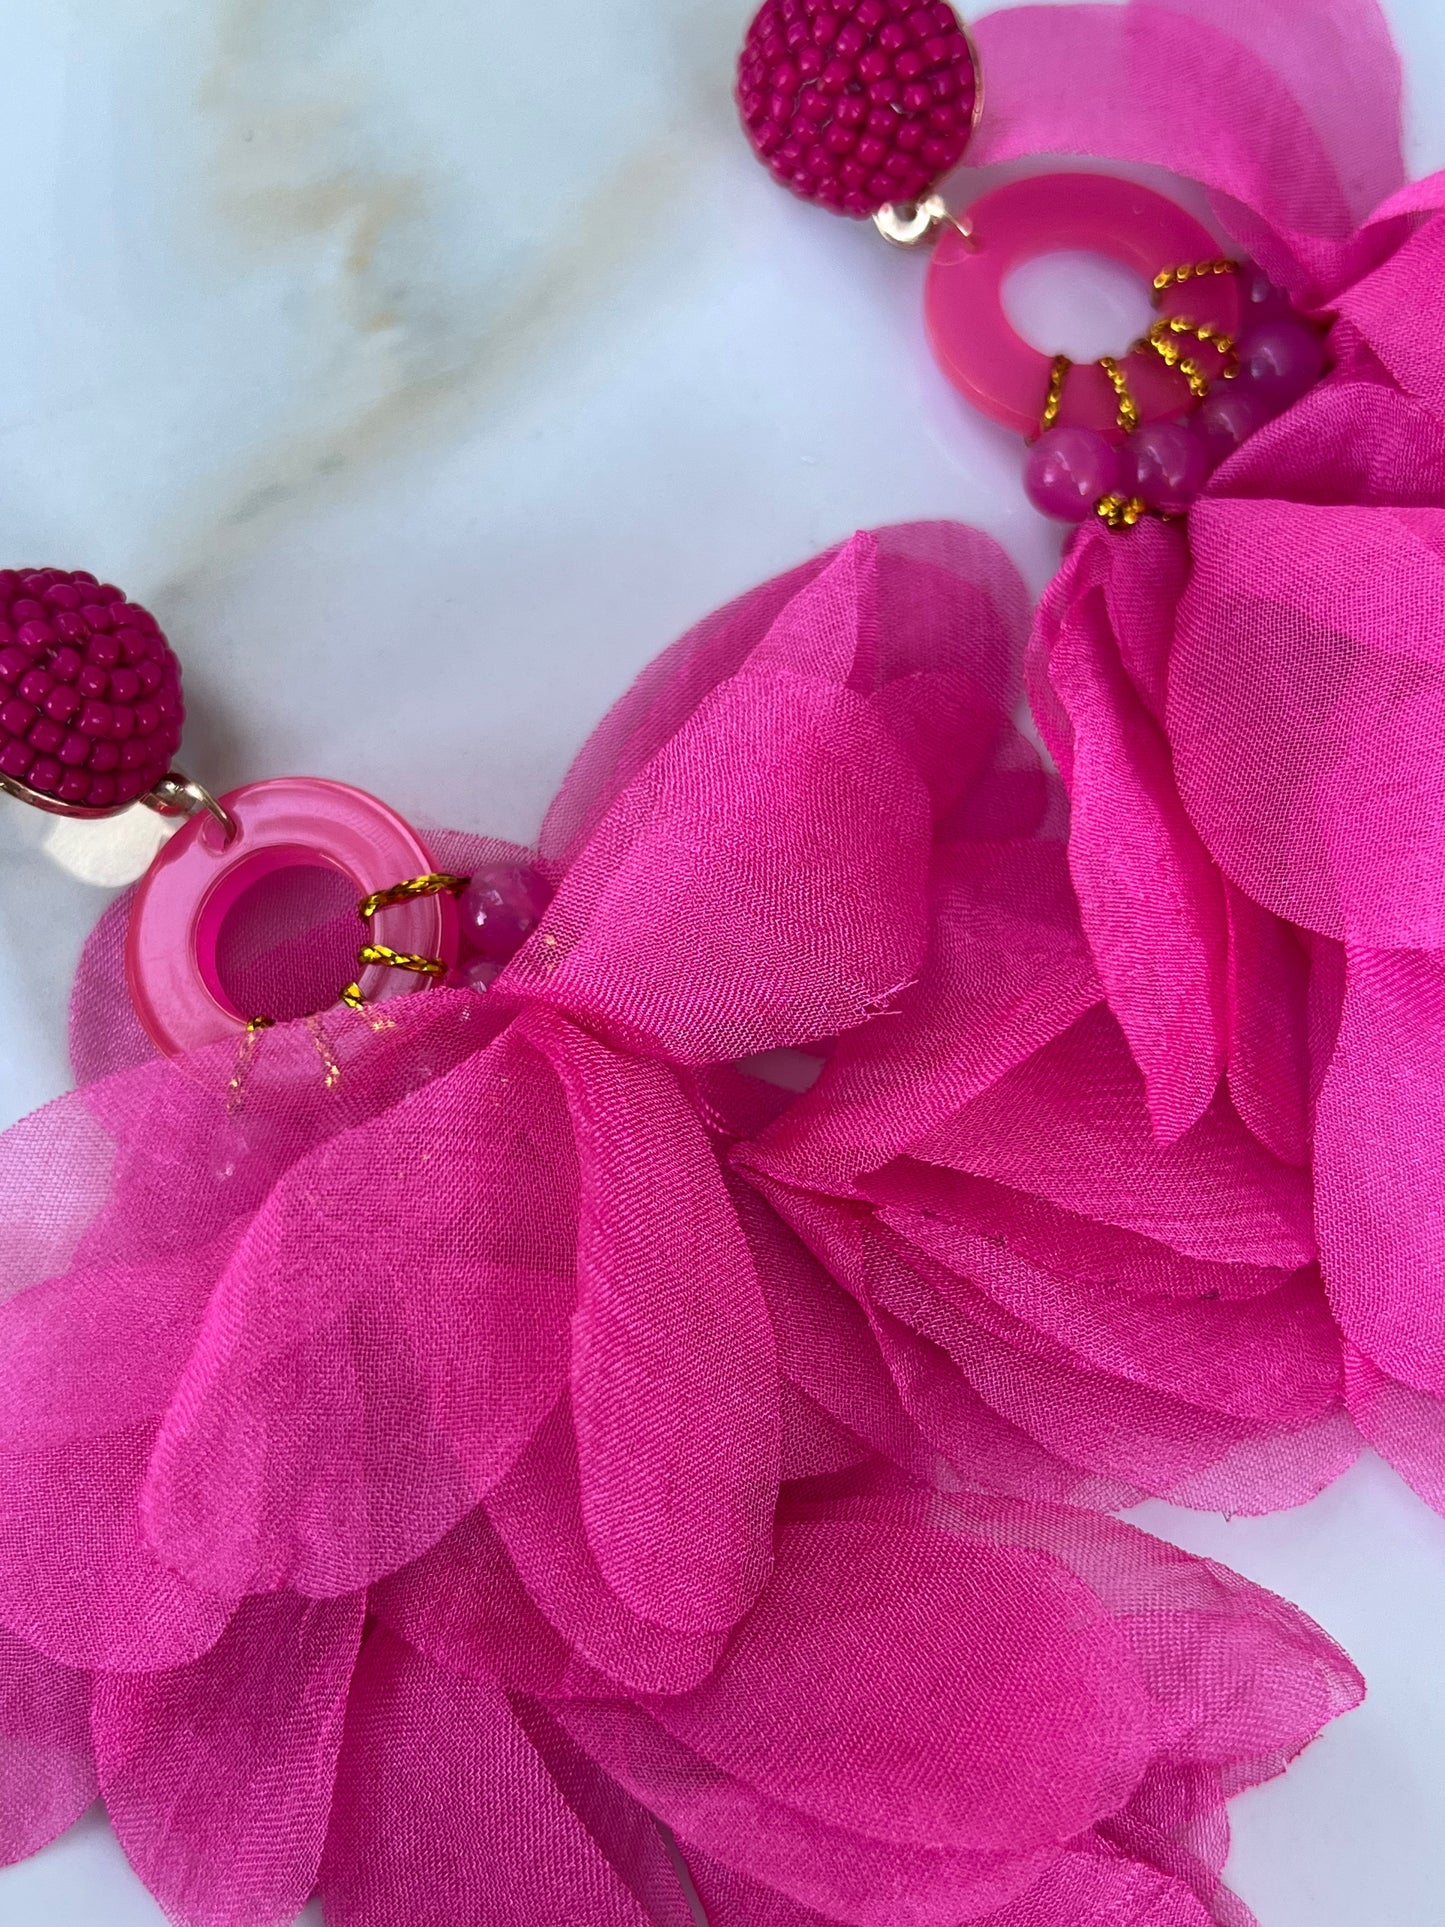 Rosé petal earrings